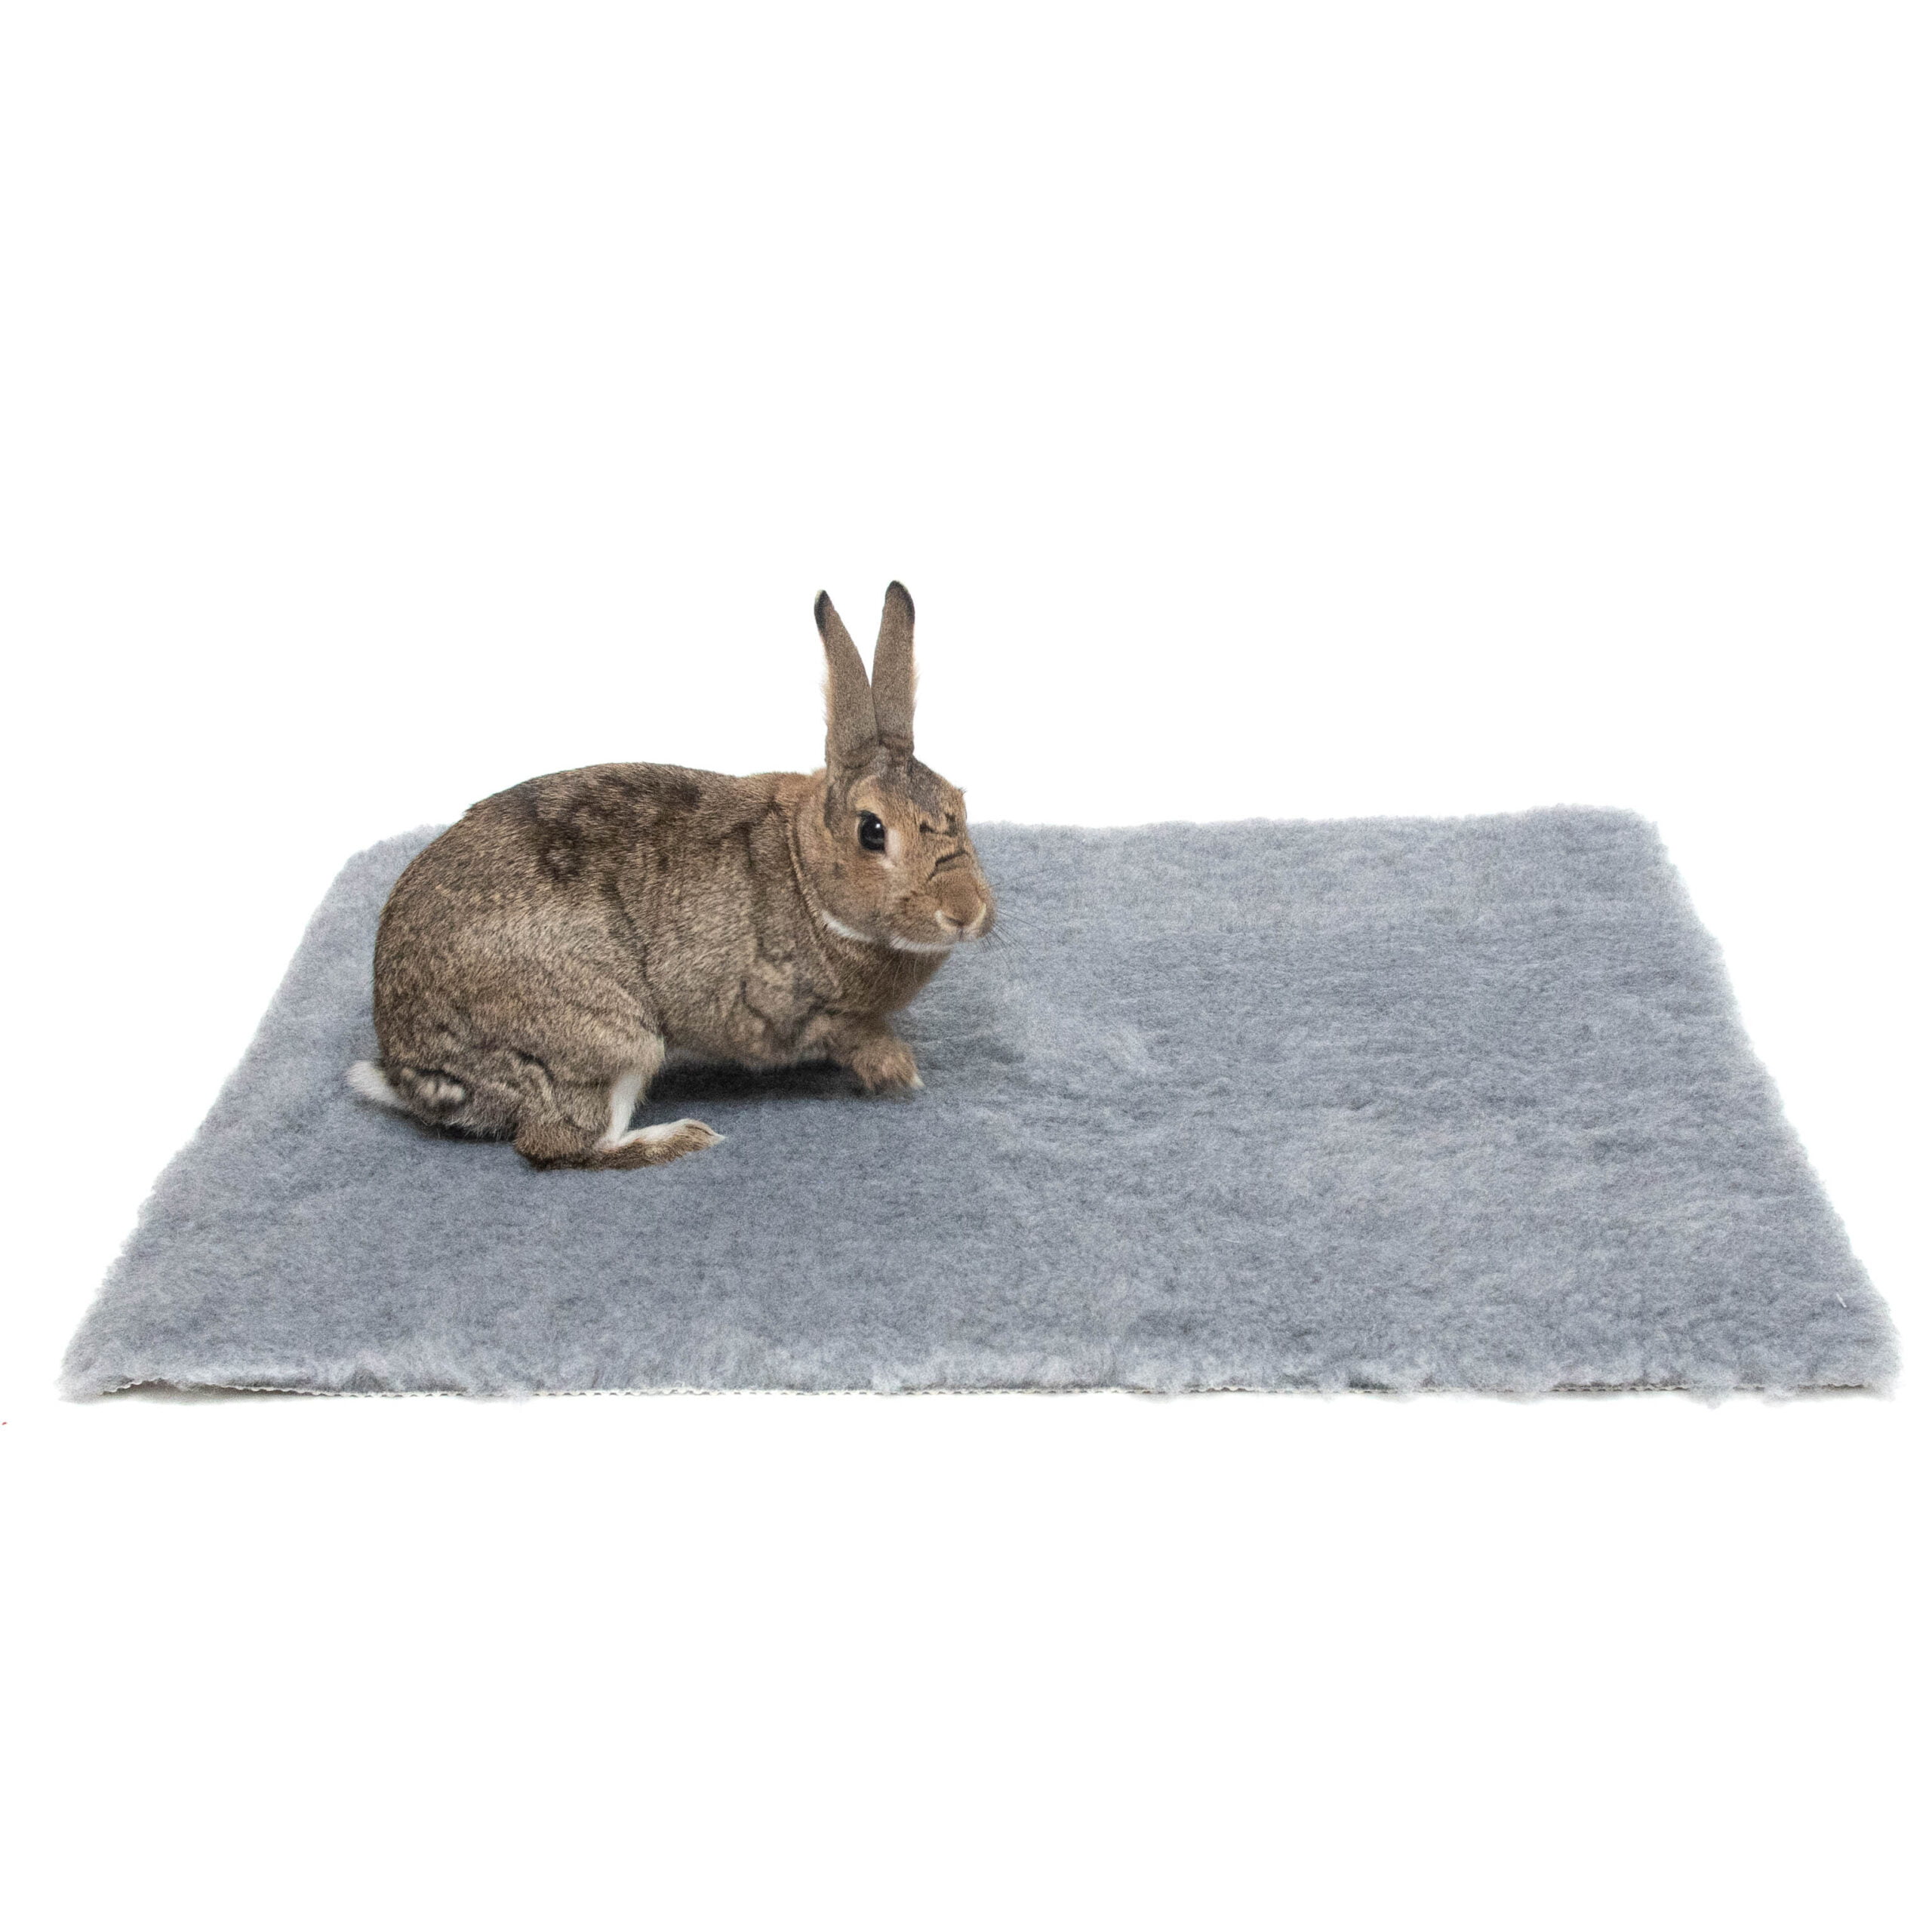 Grand tapis pour lapin - Tapis de Sol pour Lapin - Mon lapin Nain